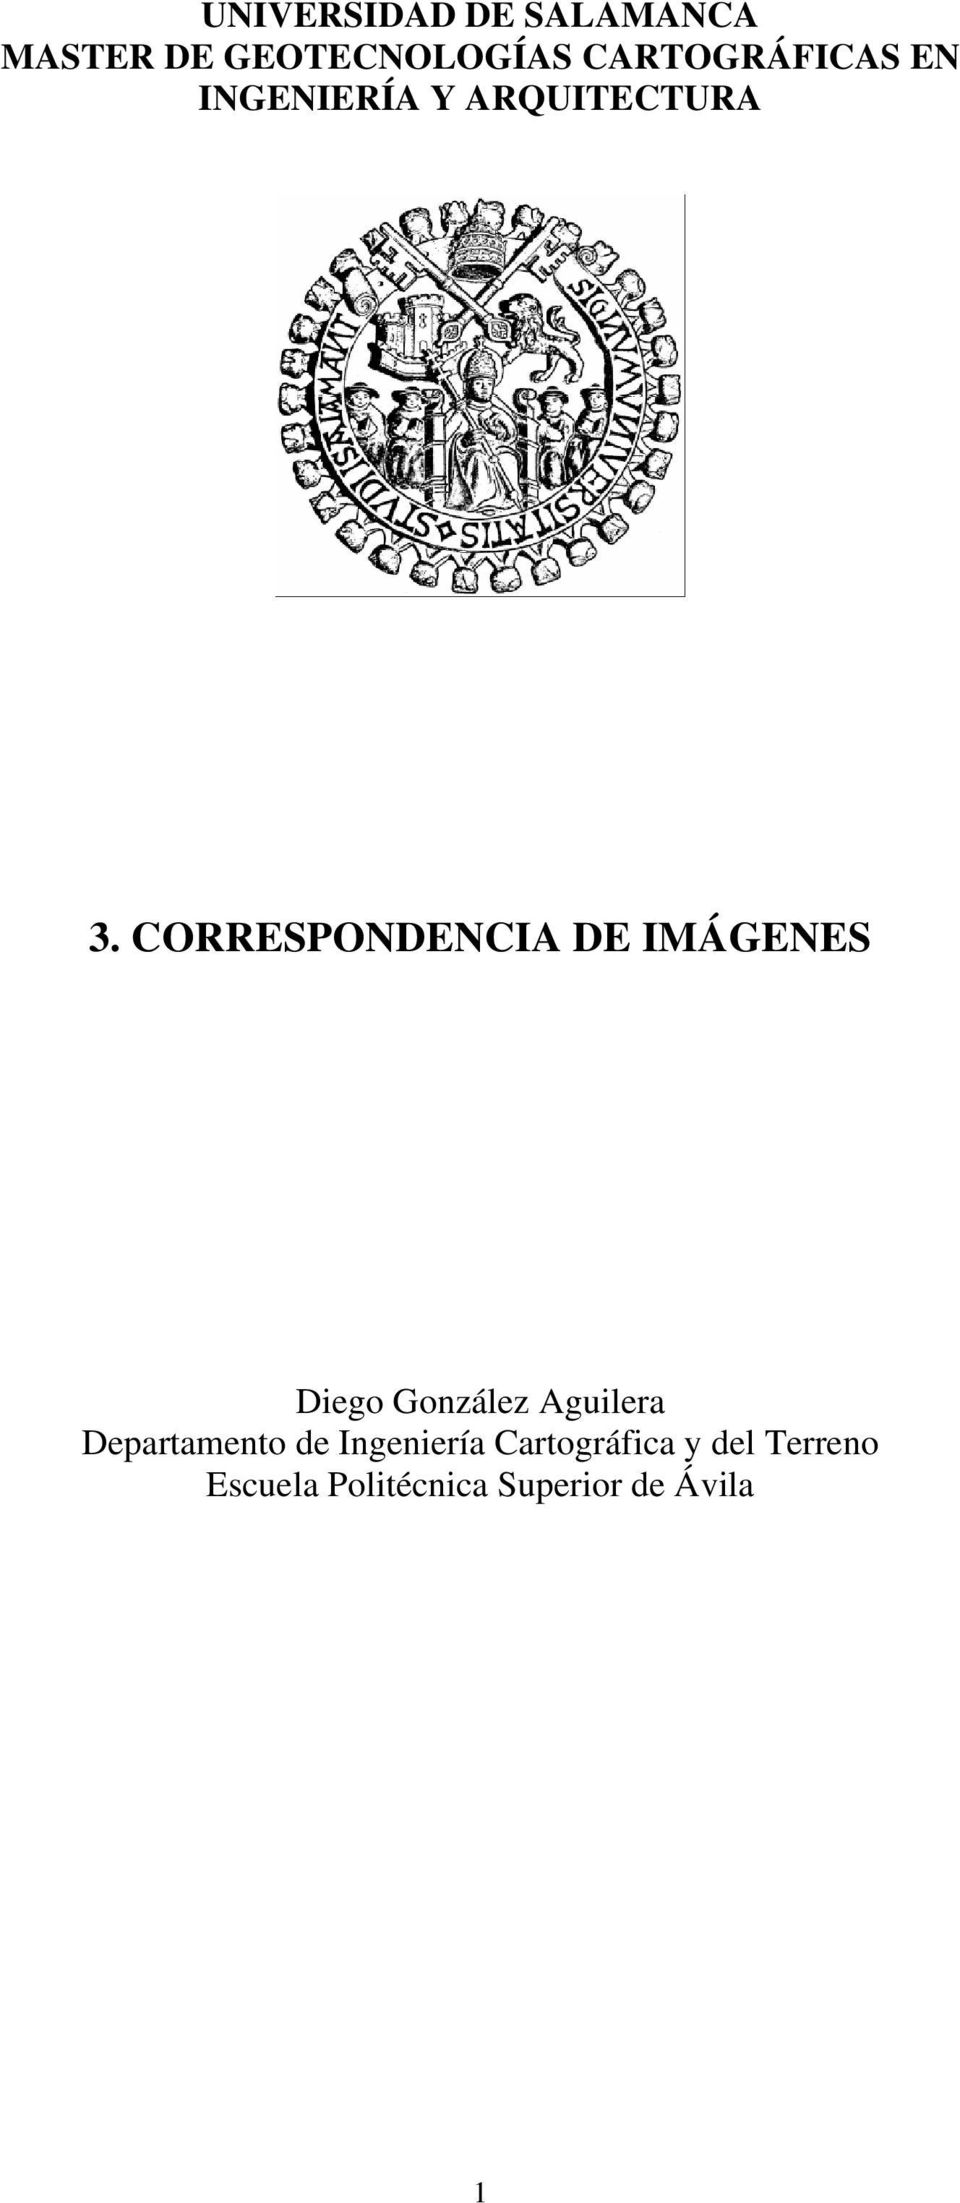 CORRESPONDENCIA DE IMÁGENES Dego González Agulera